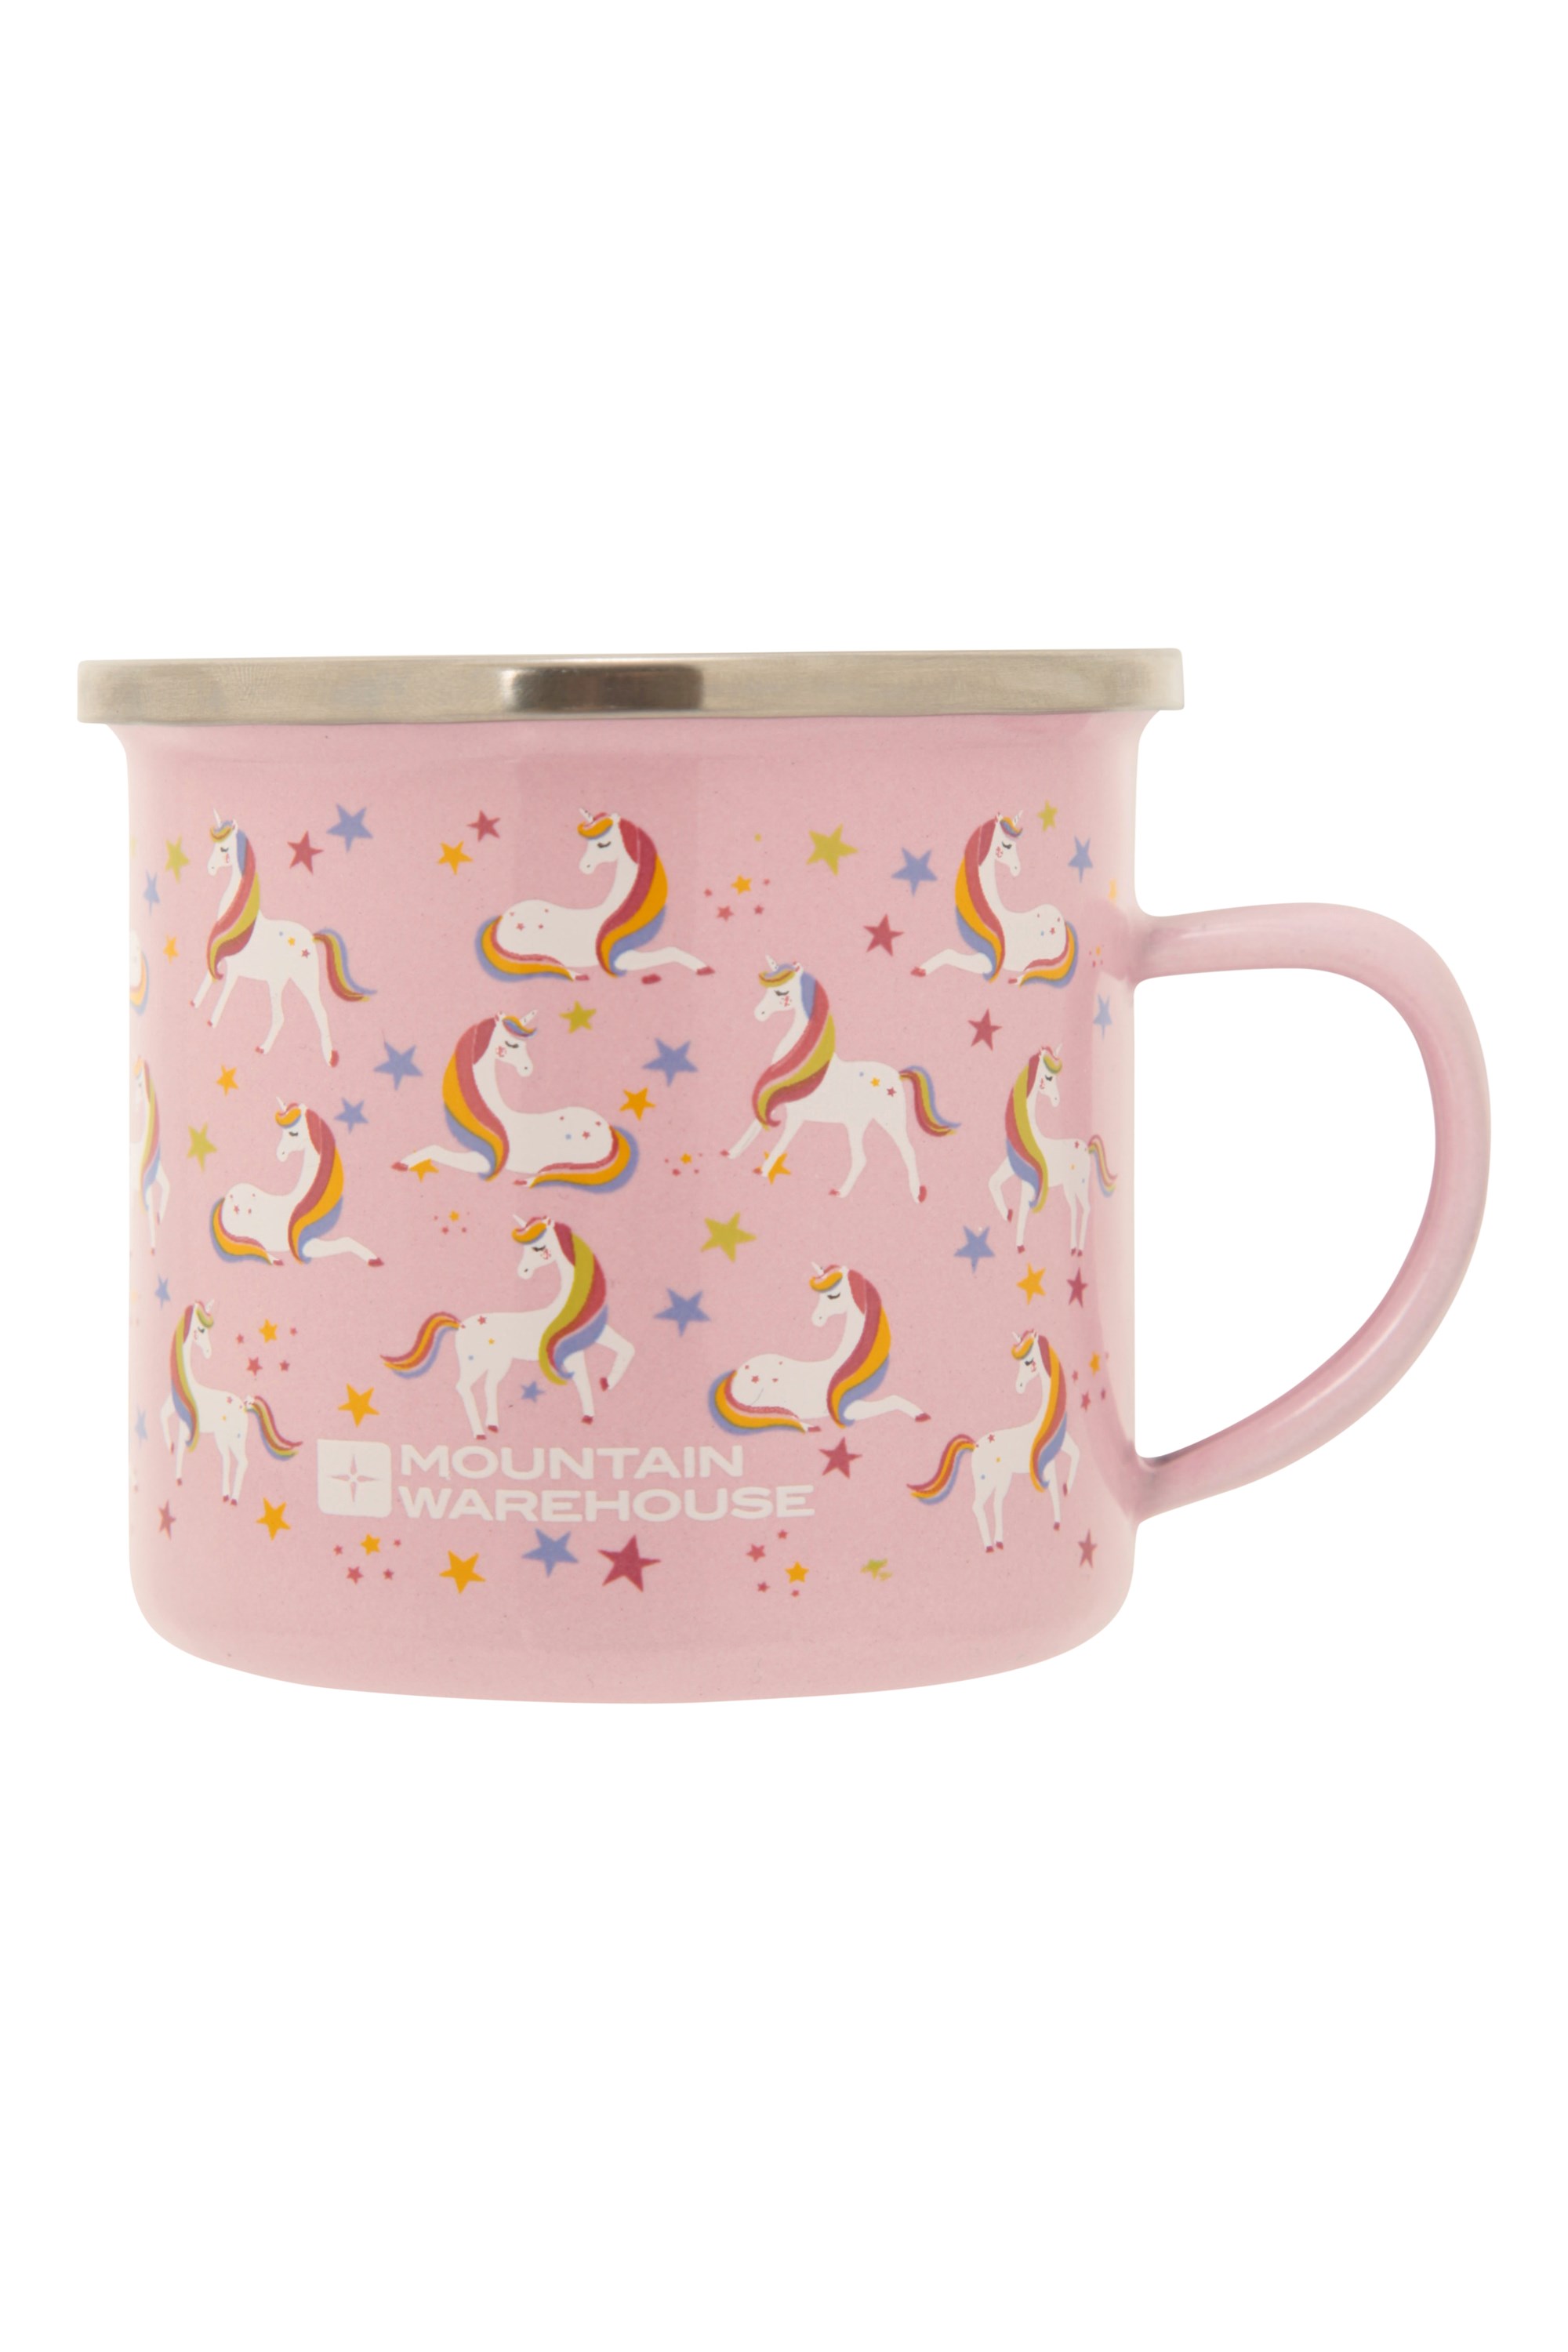 Small Unicorn Enamel Mug - 200ml - Pink